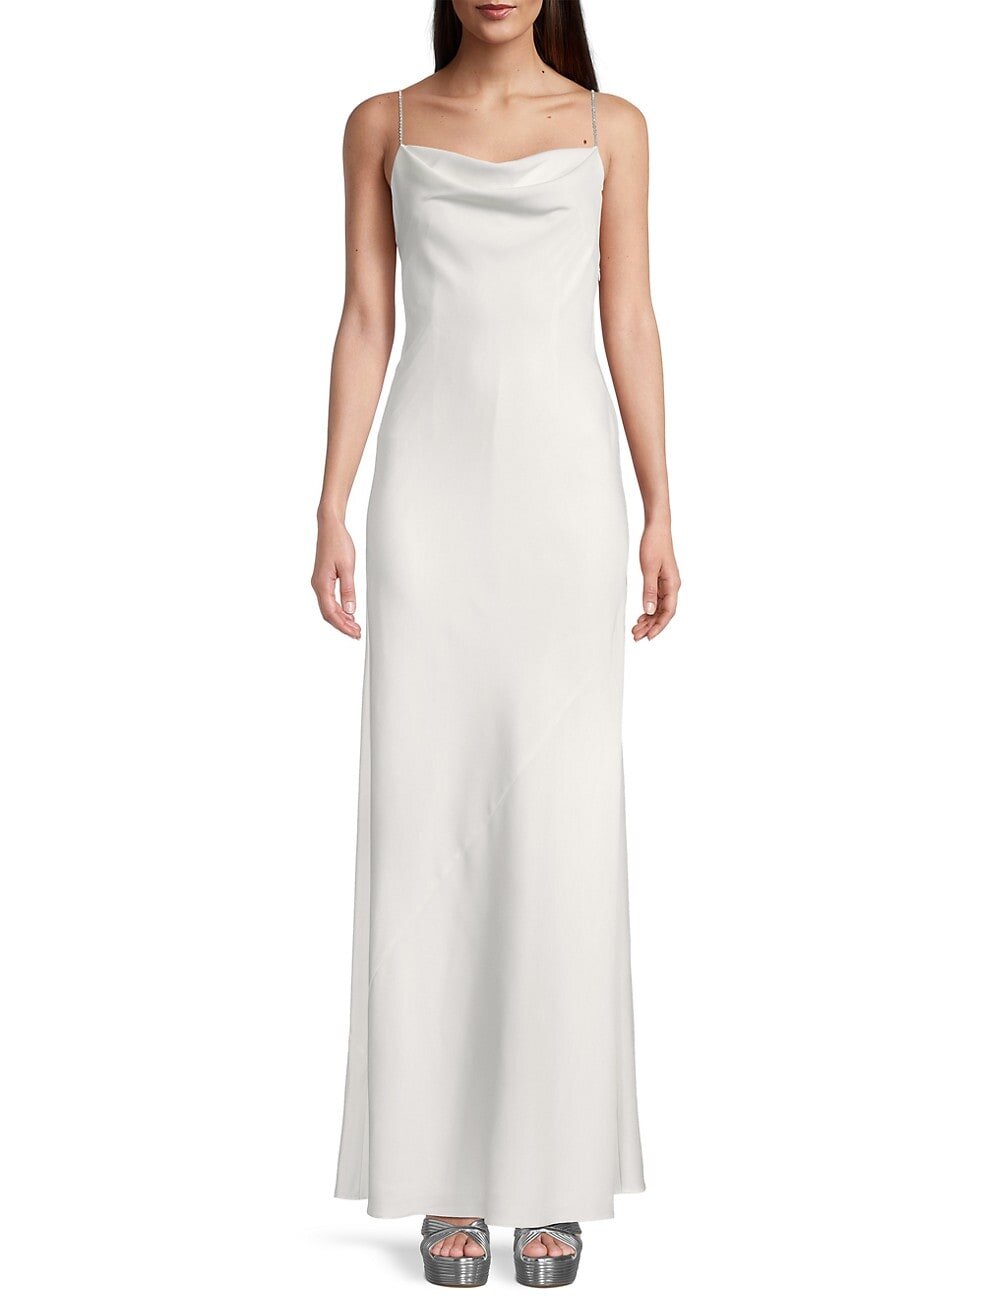 $265 Aidan by Aidan Mattox Crystal Strap Satin Gown - Saks Fifth Avenue